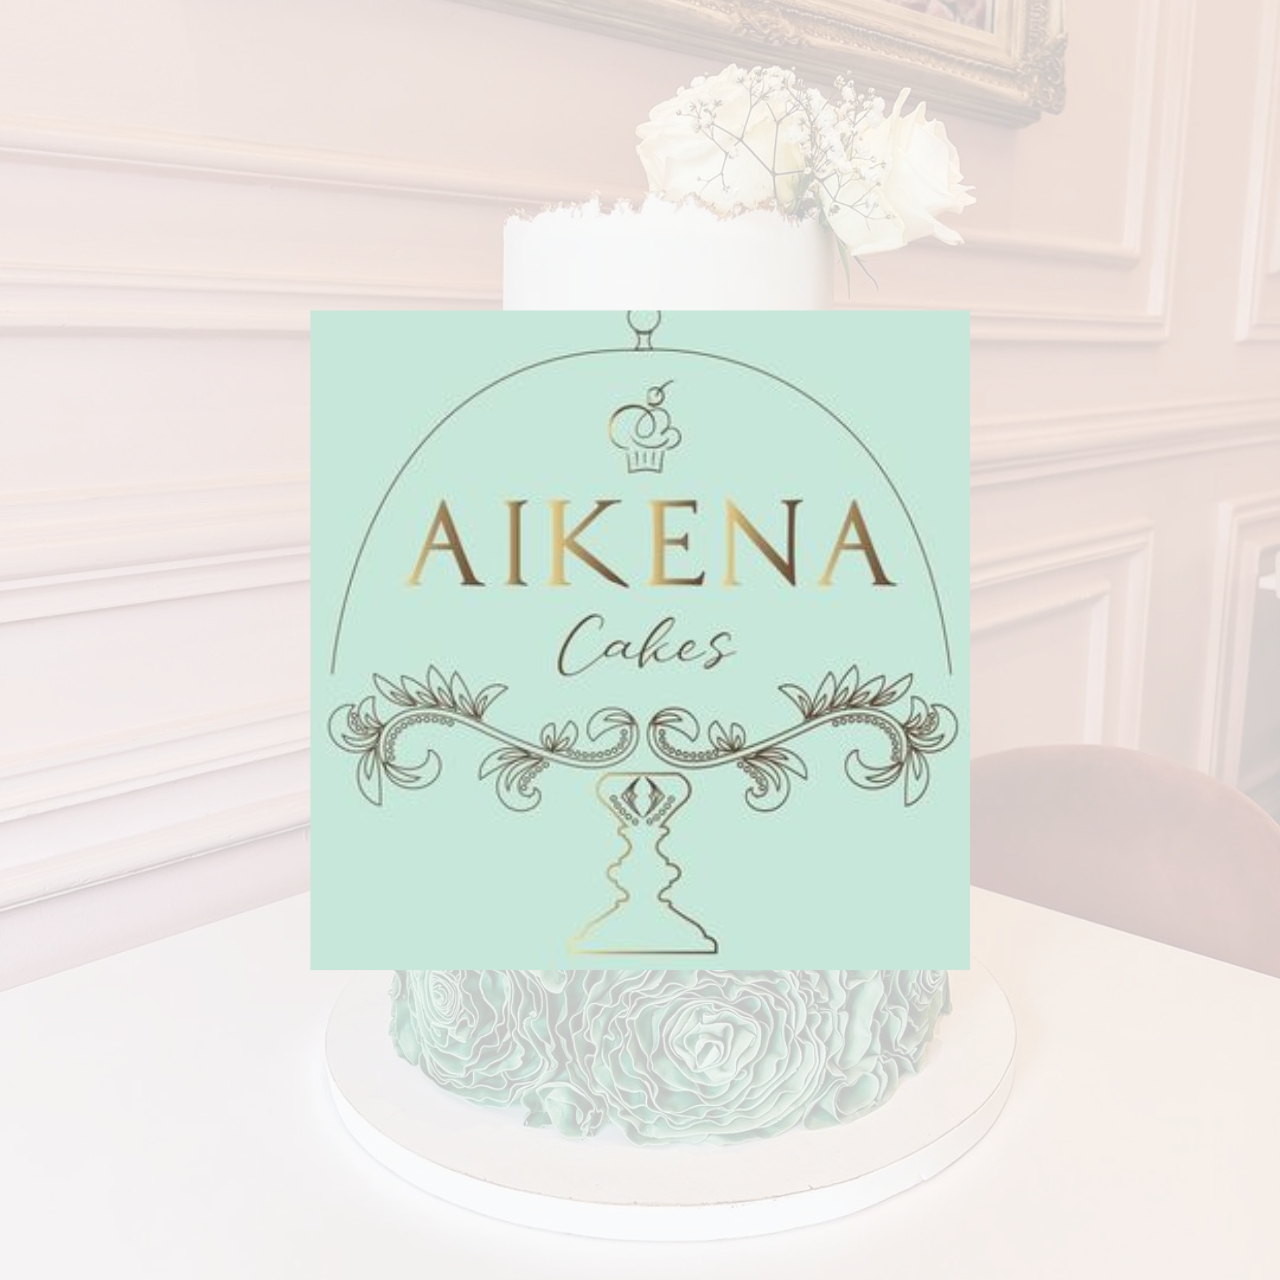 Aikena Cakes